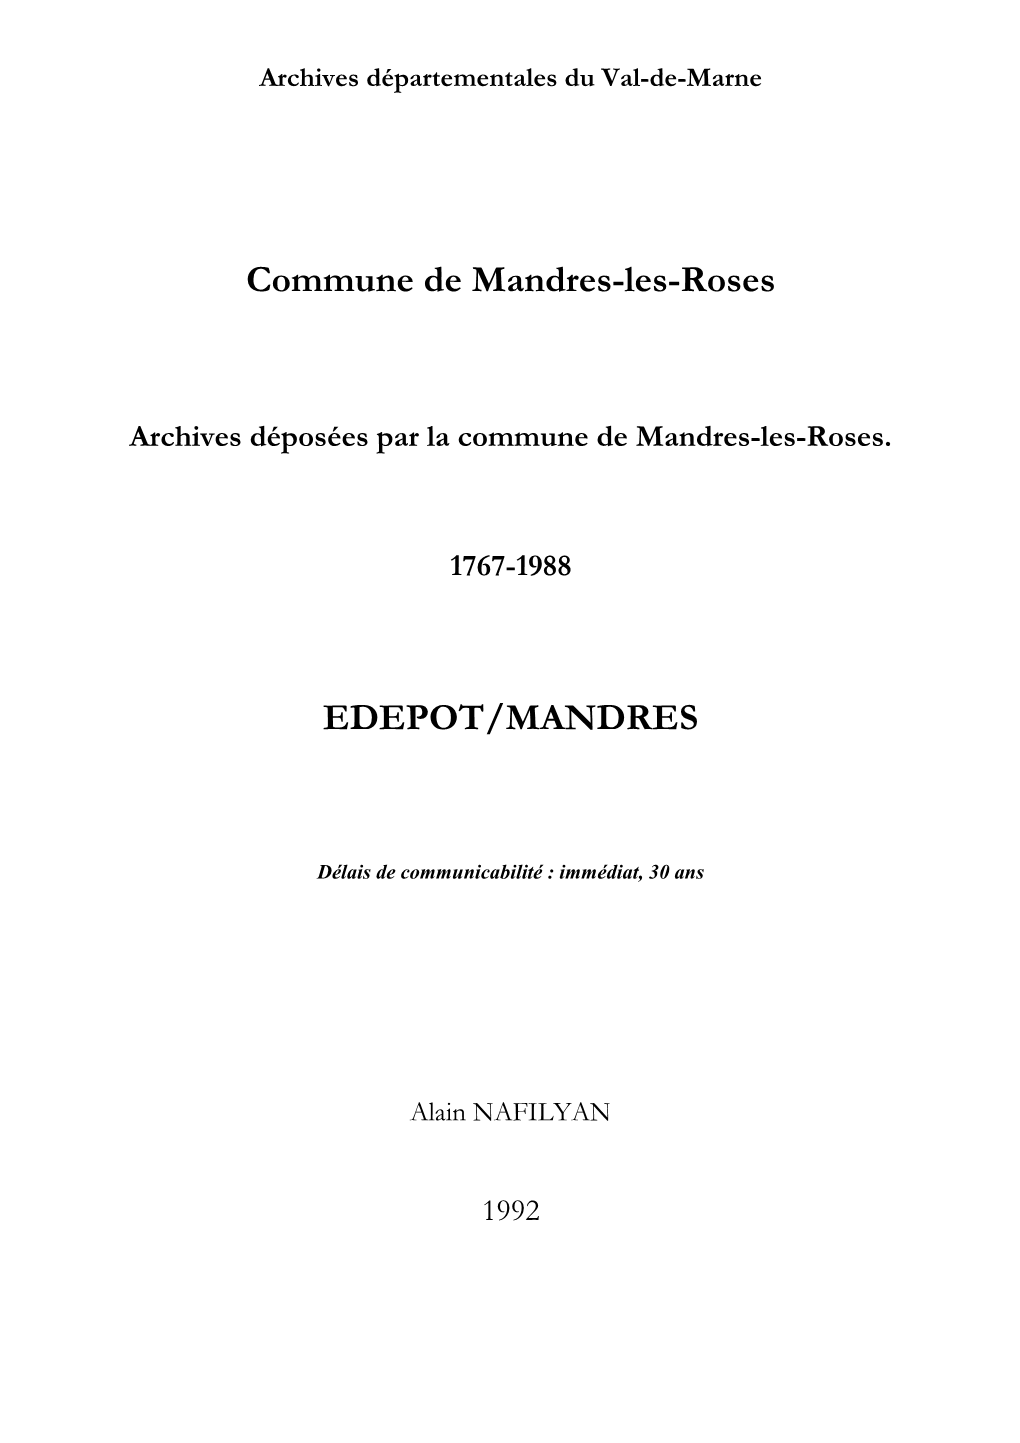 Commune De Mandres-Les-Roses EDEPOT/MANDRES